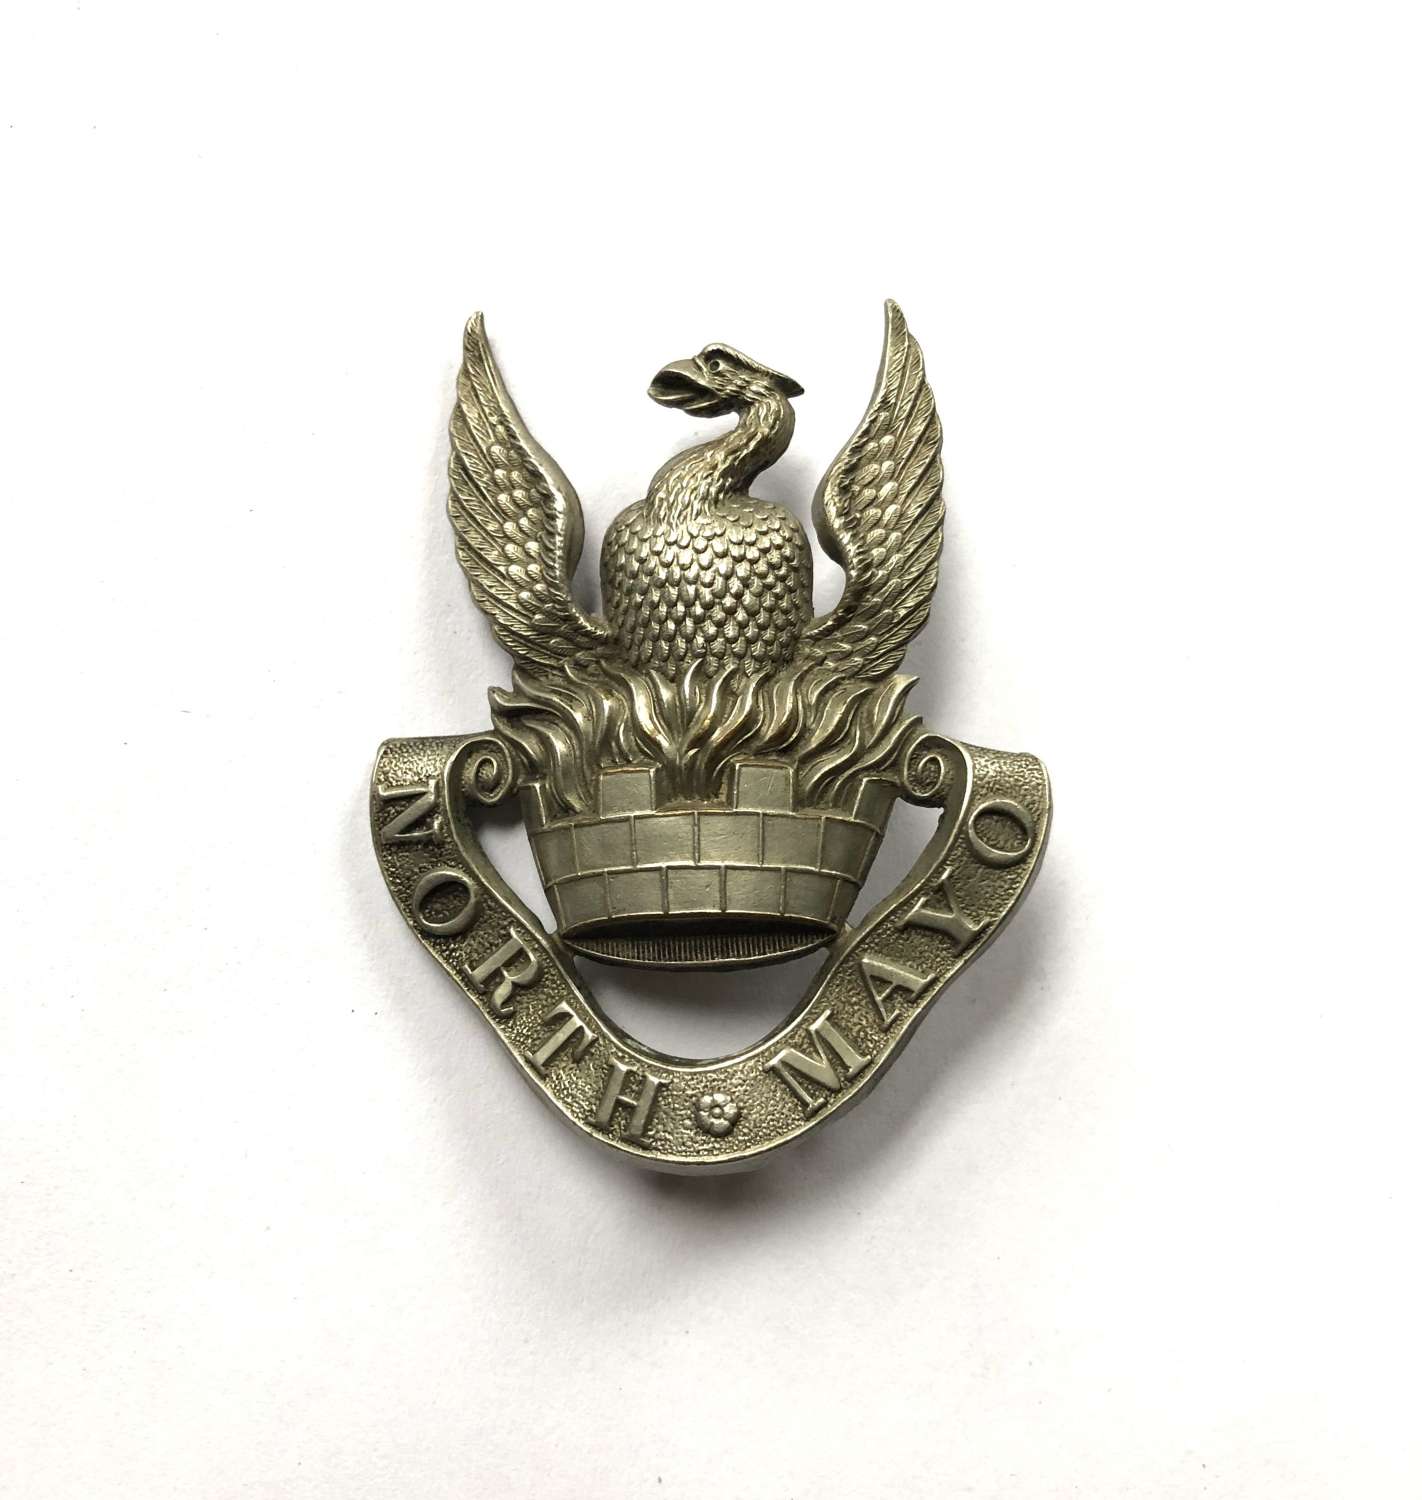 North Mayo Fusiliers Irish Militia Victorian glengarry badge c1874-81